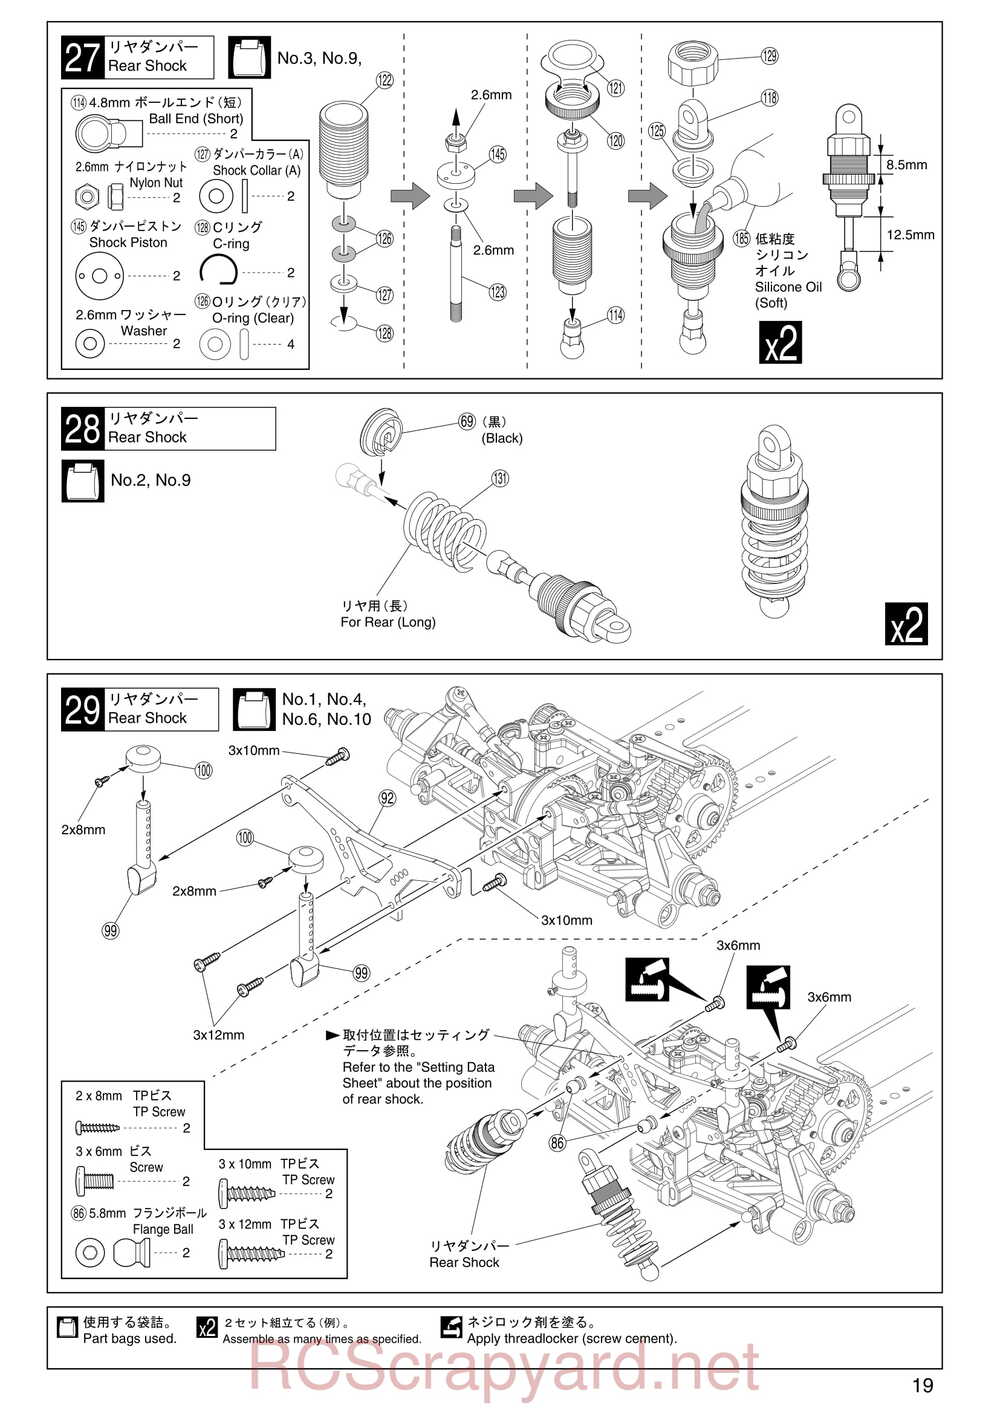 Kyosho - 31256 - V-One RRR - Manual - Page 19